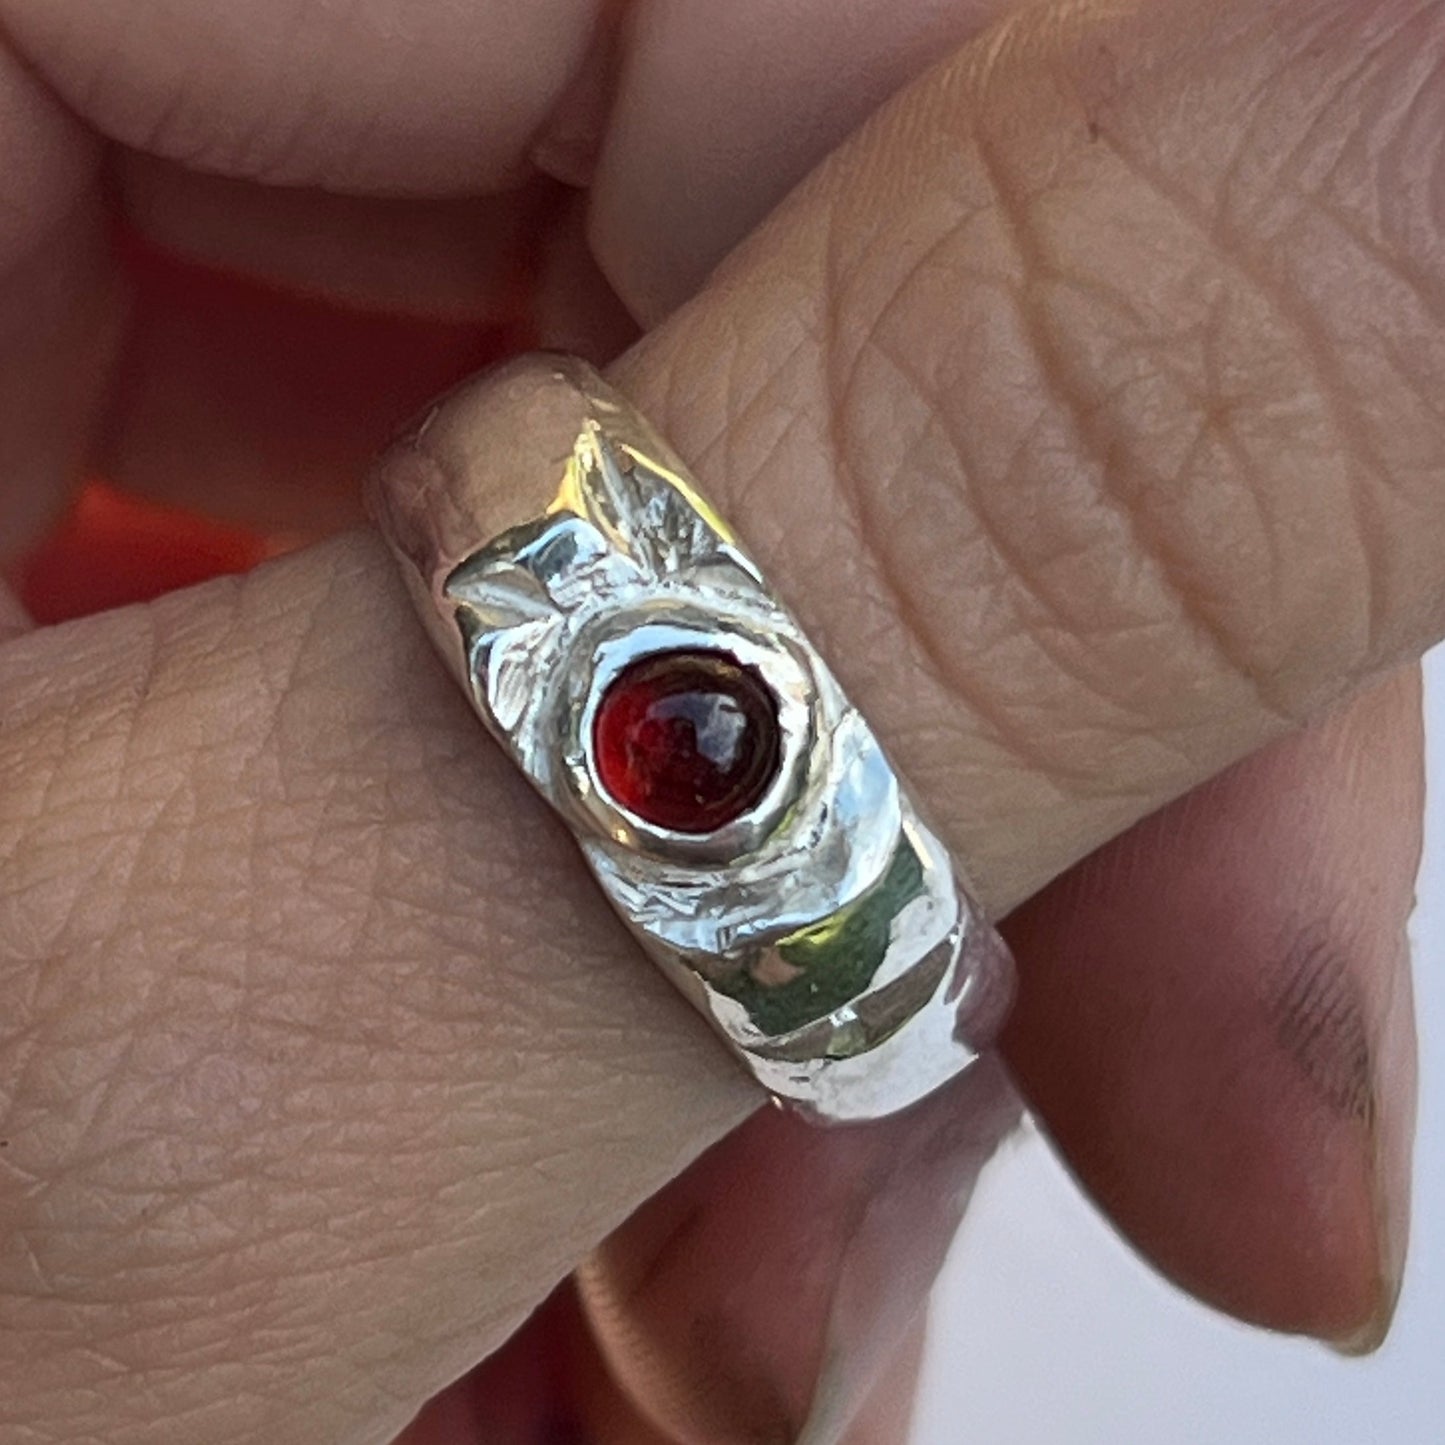 Caldera Ring - One of One